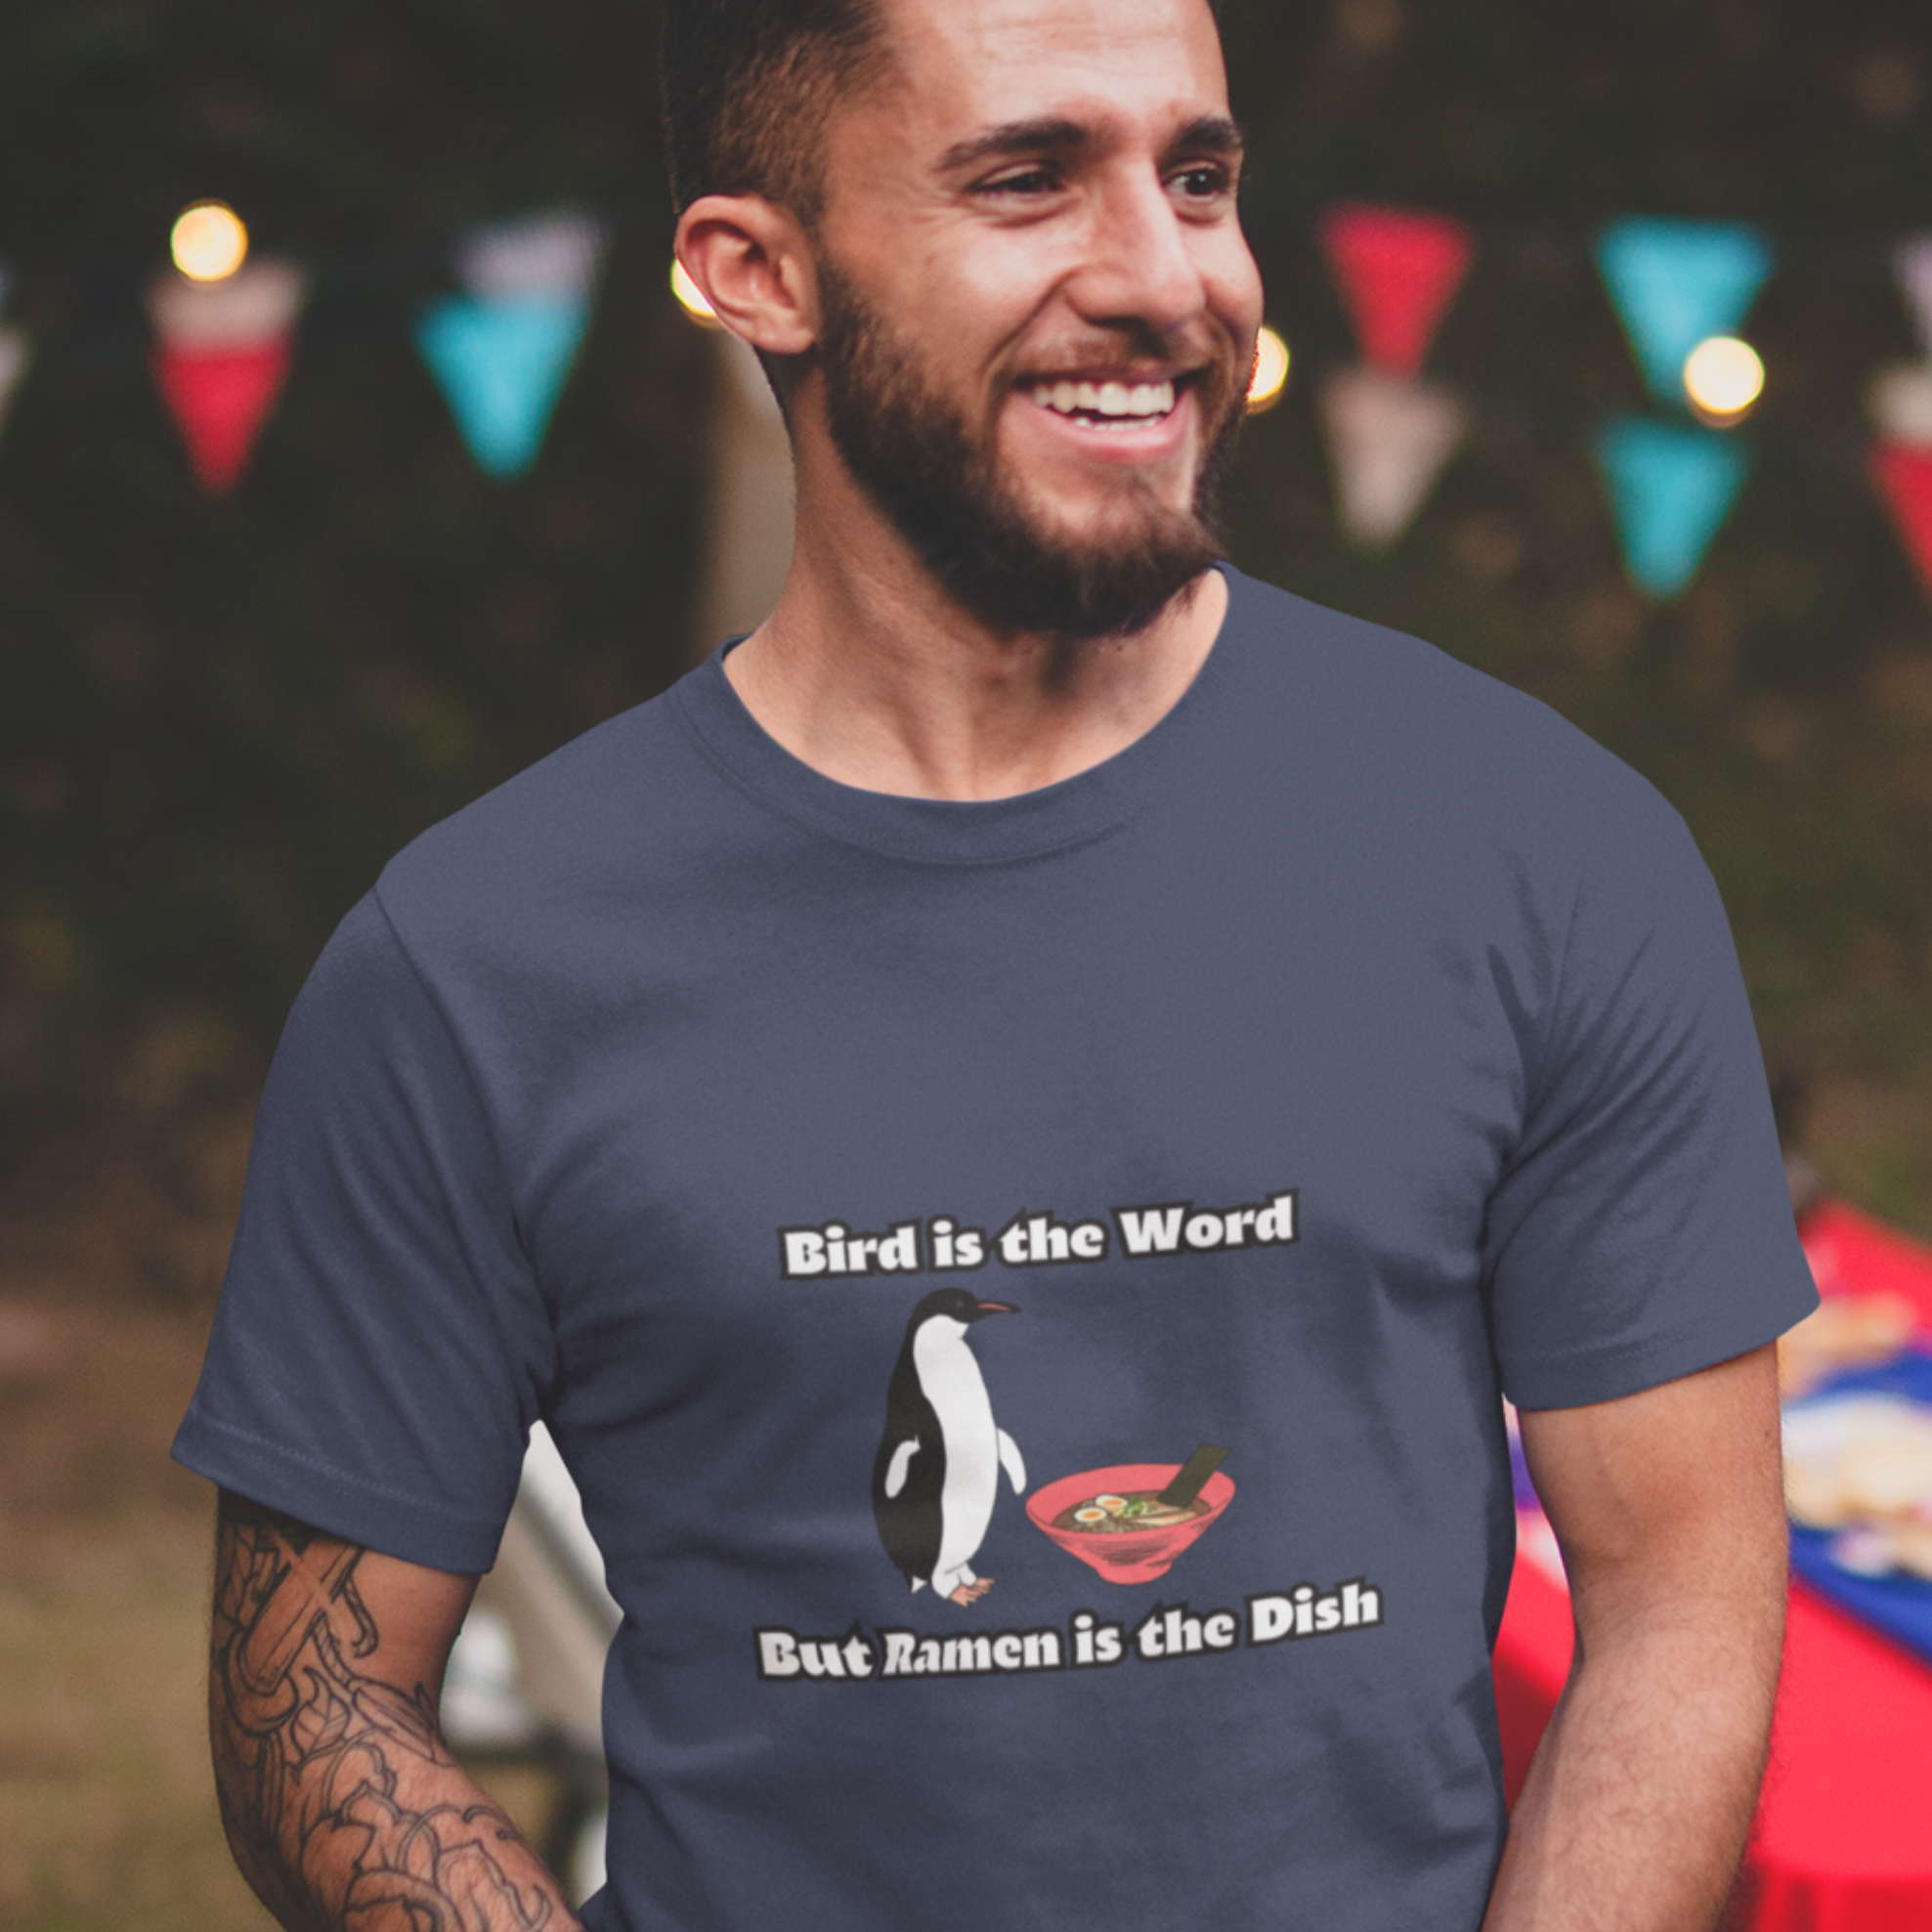 Ramen T-shirt: "Bird is the Word but Ramen is the Dish" with Cute Penguin Illustration - Japanese Foodie Shirt and Ramen Art